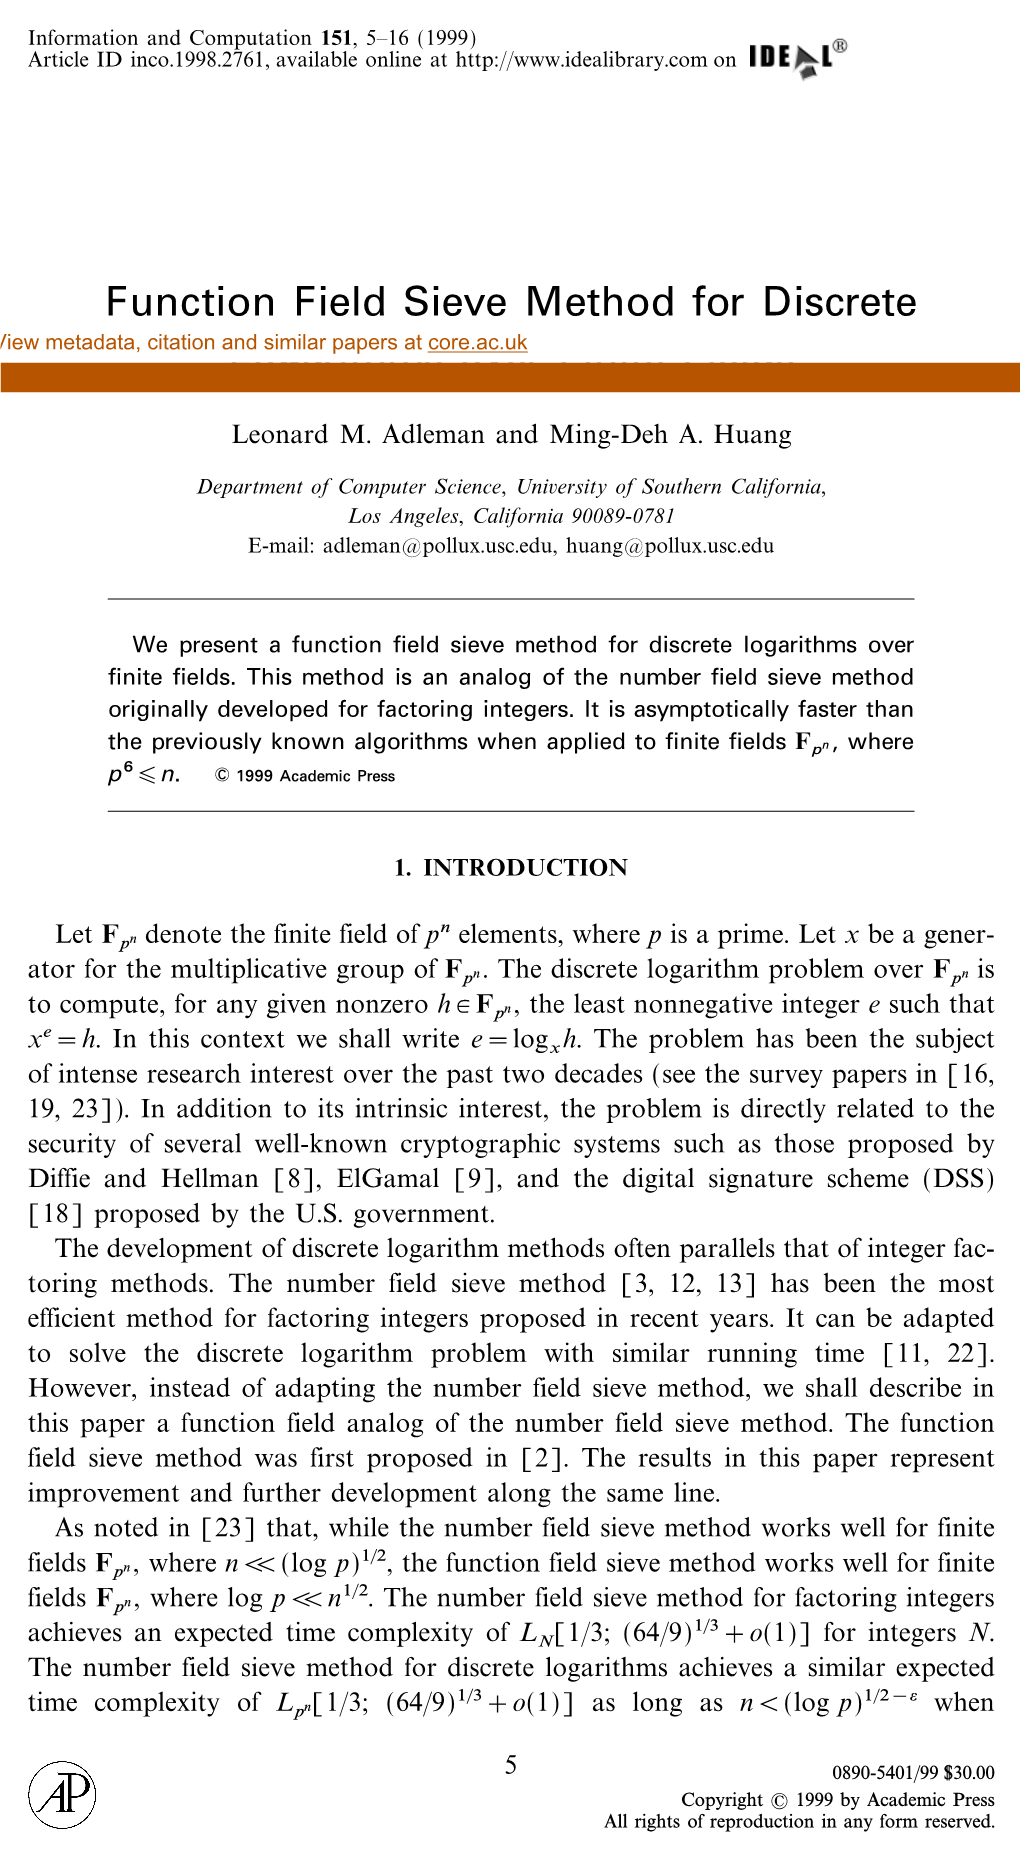 Function Field Sieve Method for Discrete Logarithms Over Finite Fields